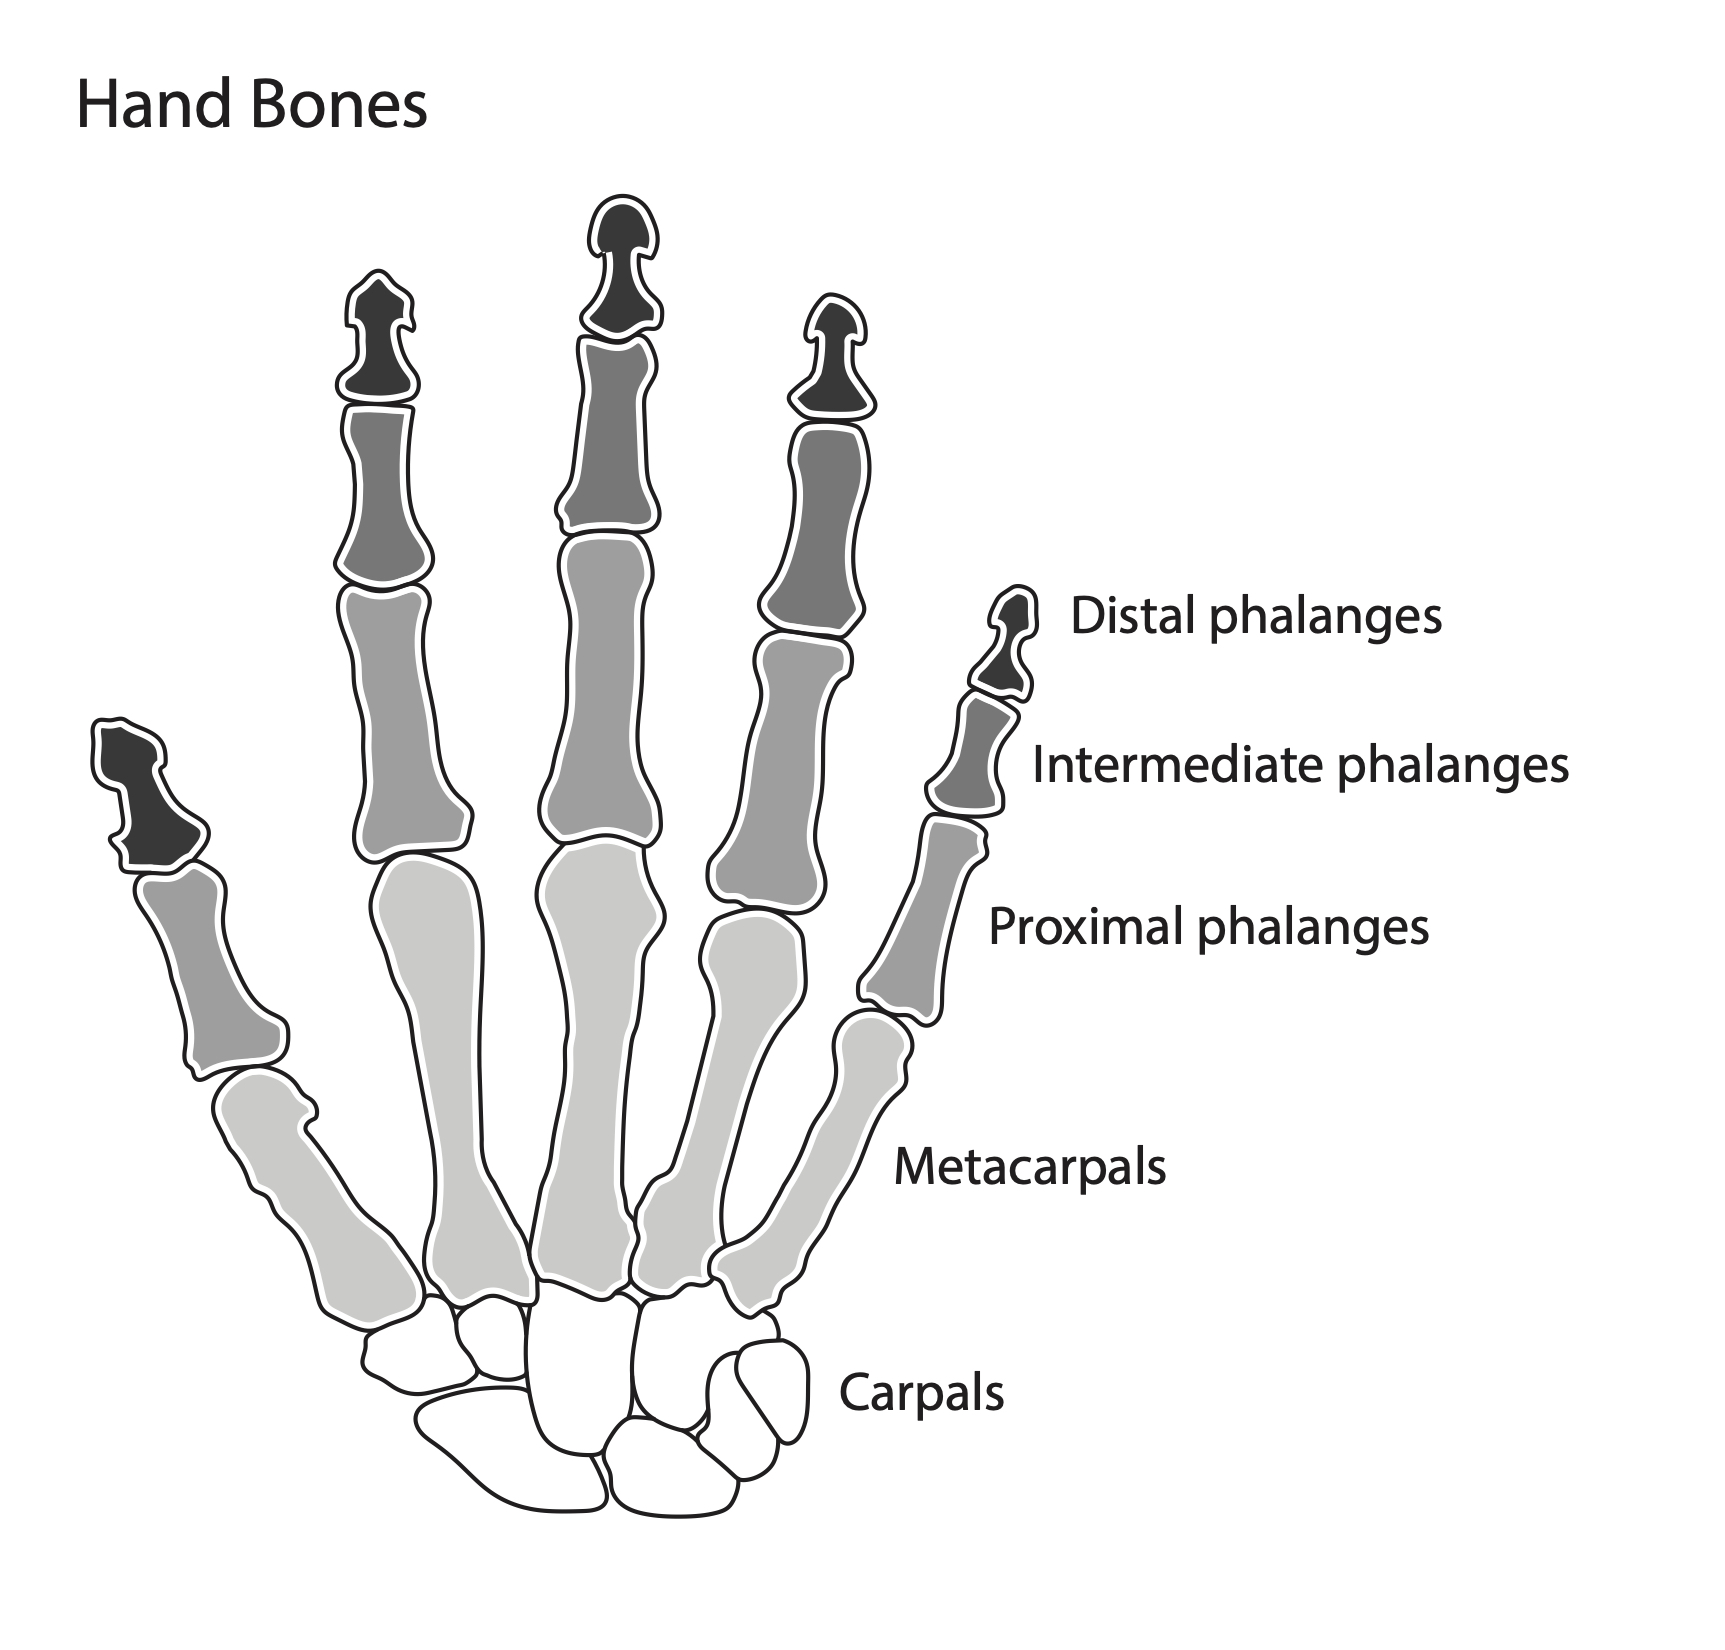 bones of the hand diagram